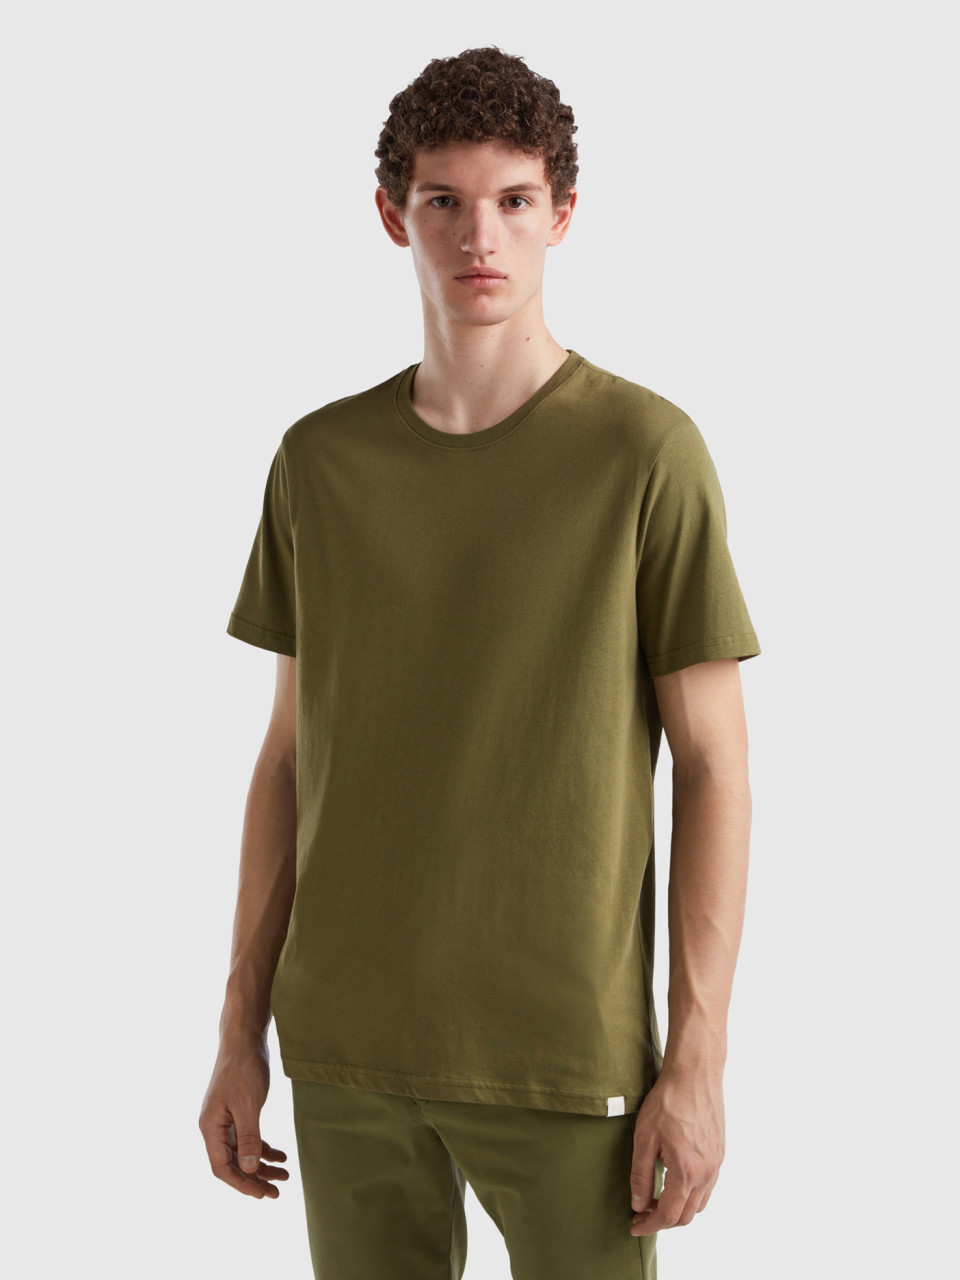 Benetton, Military Green T-shirt, Dark Green, Men